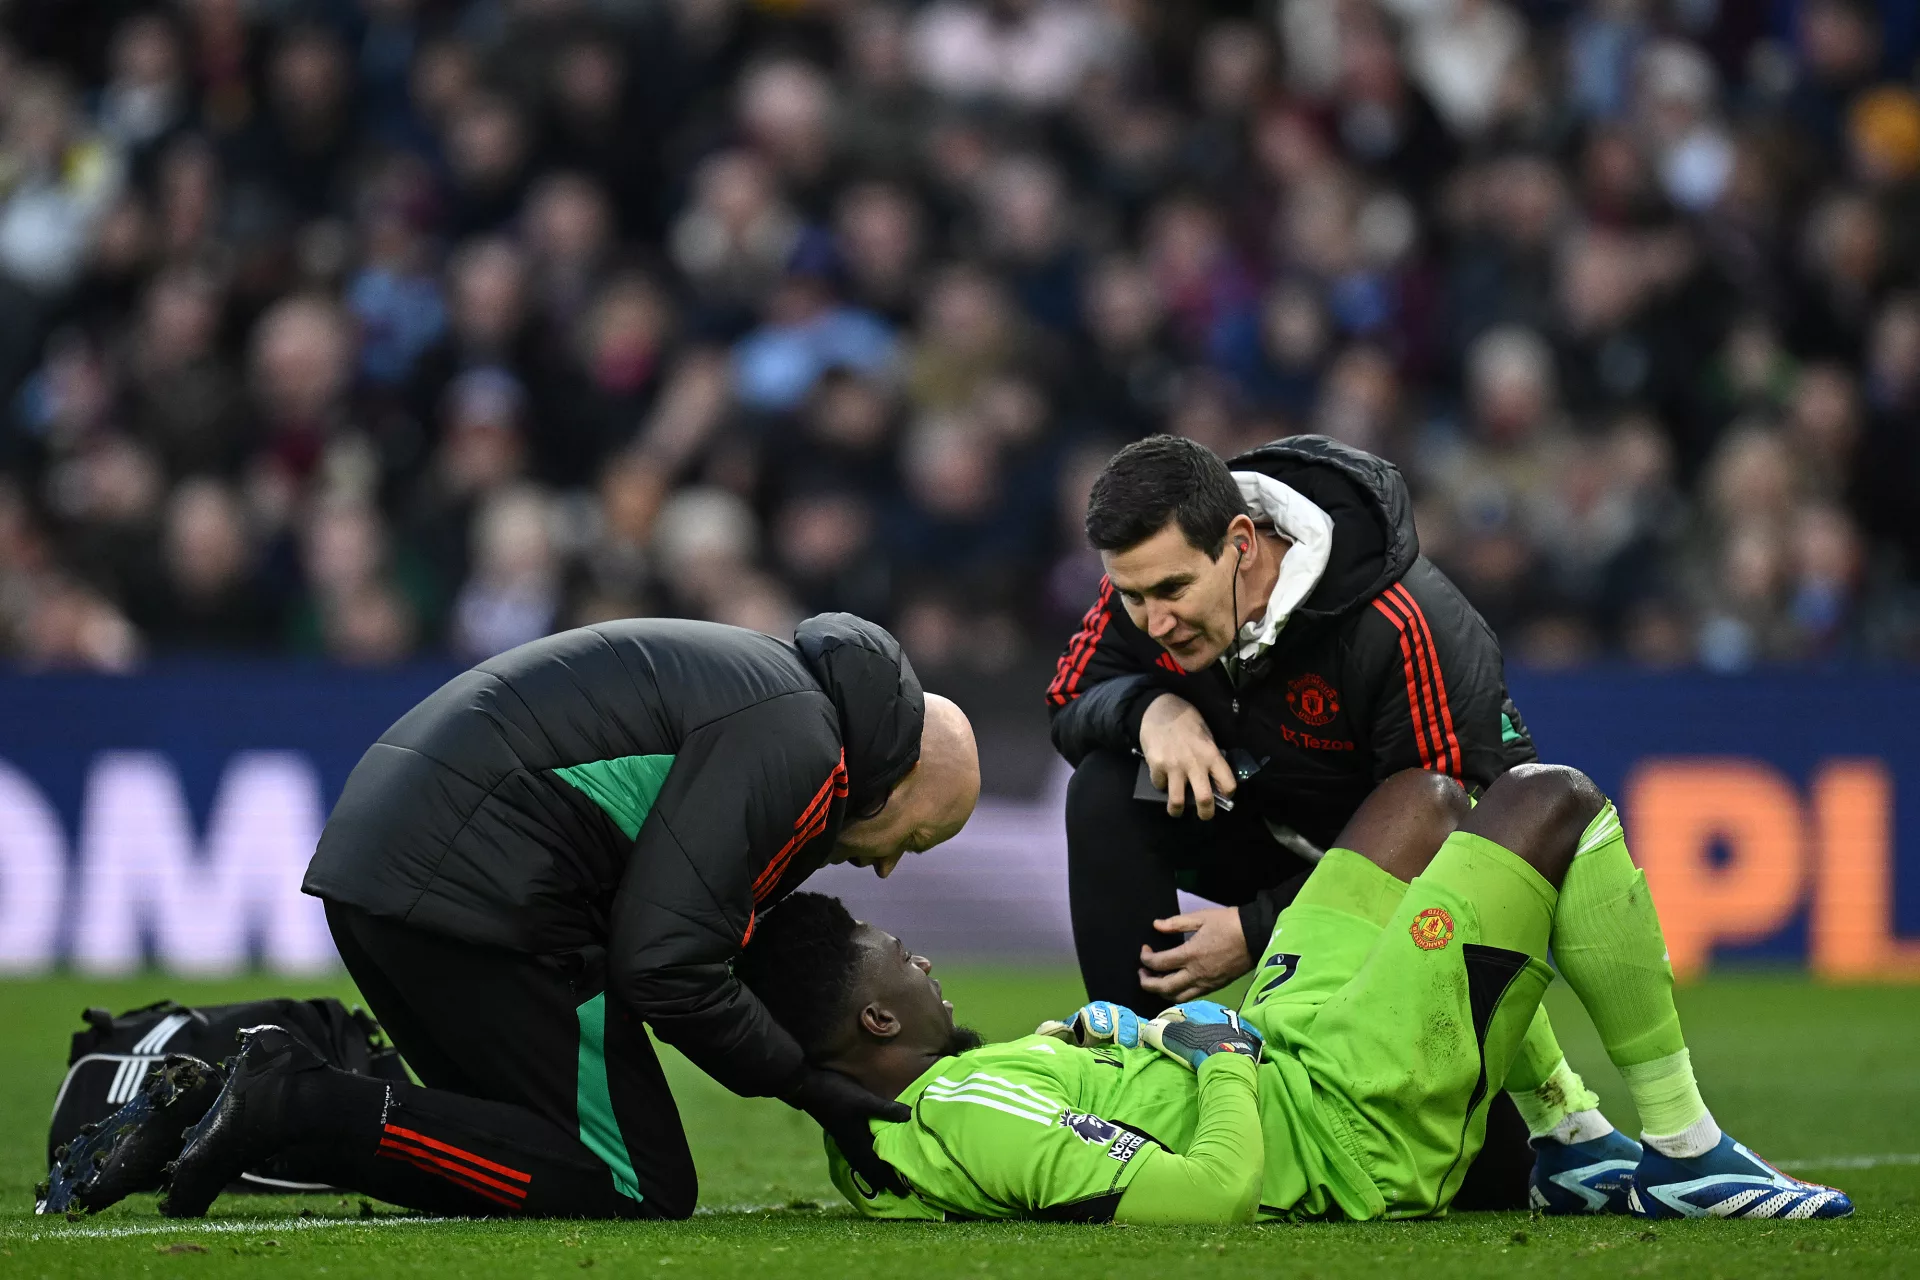 Andre Onana down injured vs Aston Villa